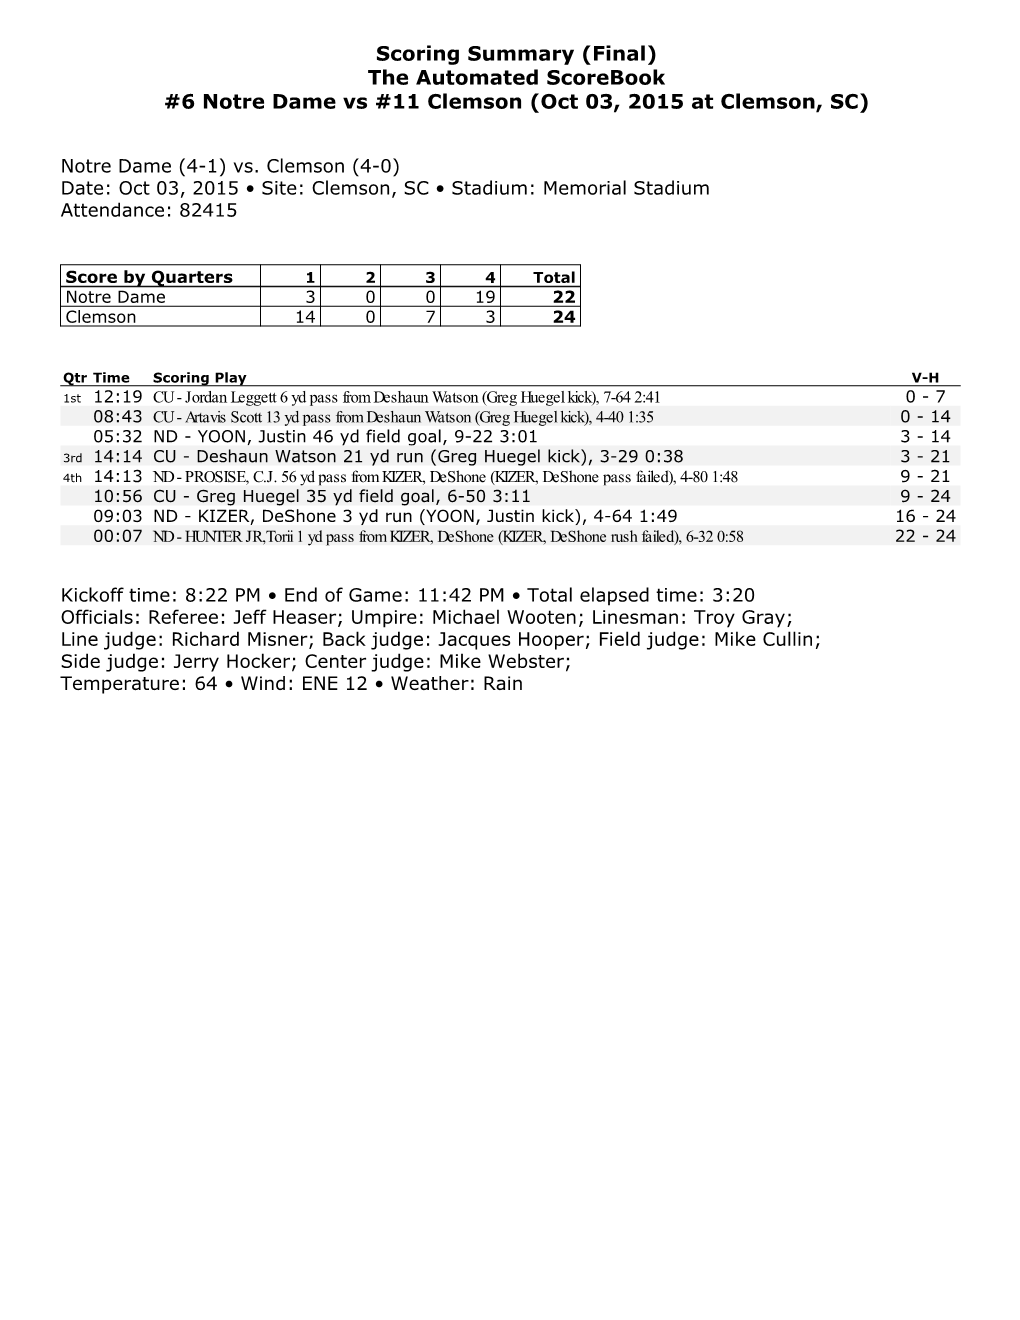 Scoring Summary (Final) the Automated Scorebook #6 Notre Dame Vs #11 Clemson (Oct 03, 2015 at Clemson, SC)